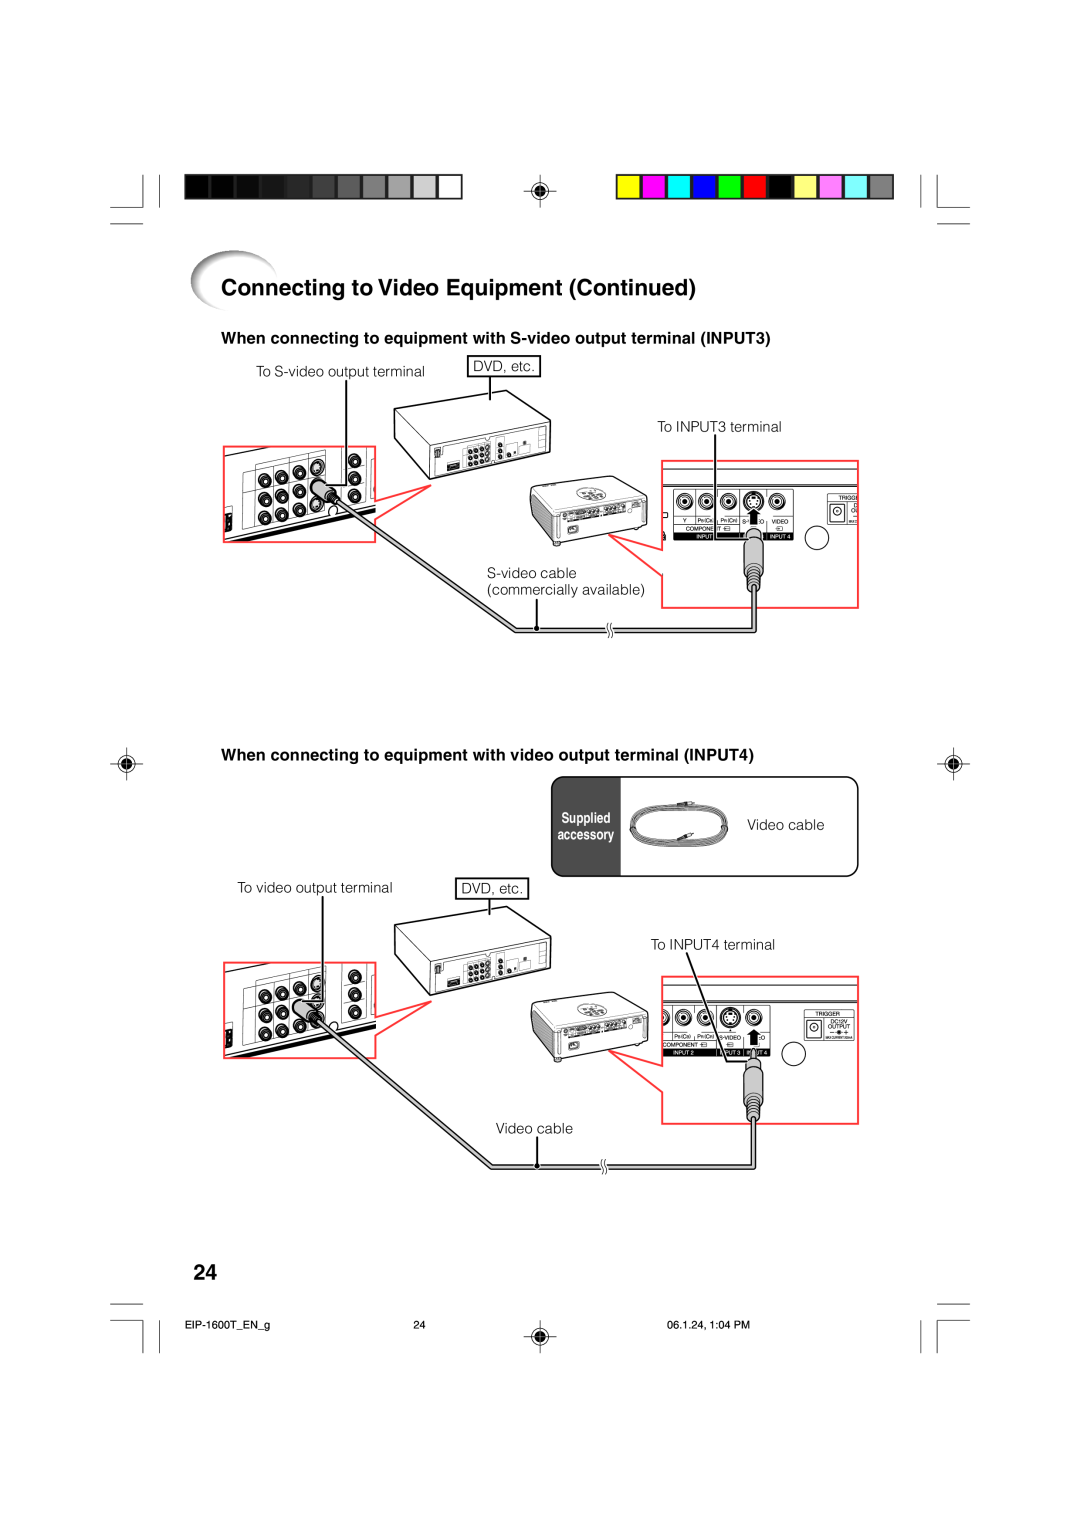 Eiki EIP-1600T Connecting to Video Equipment Continued, When connecting to equipment with S-video output terminal INPUT3 